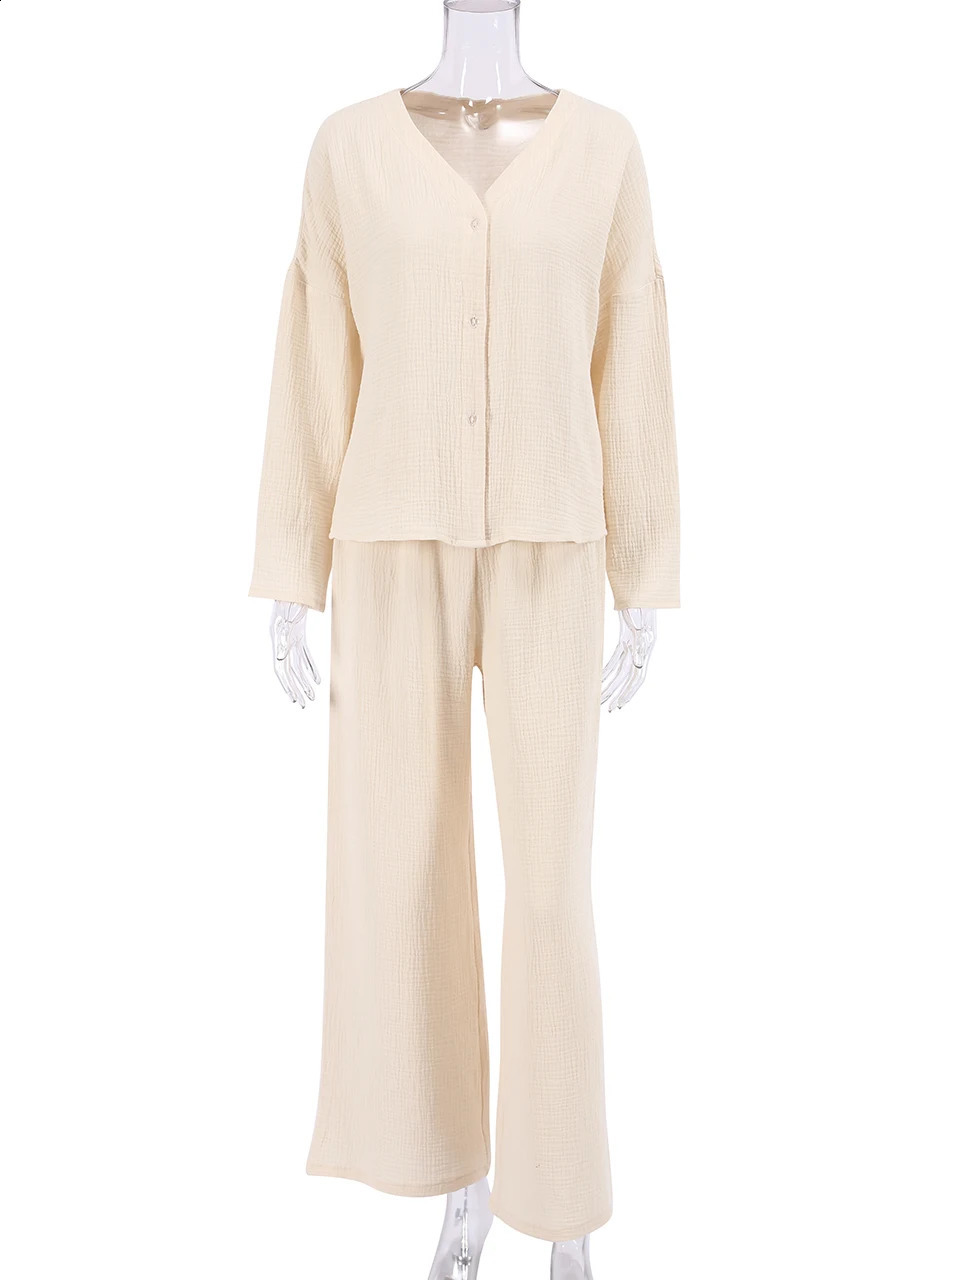 Linad Khaki Pure Cotton Sleepwear V Neck Single Breasted Wide Leg Pants Trouser Suits Drop Sleeves Set Woman Loungewear 240202